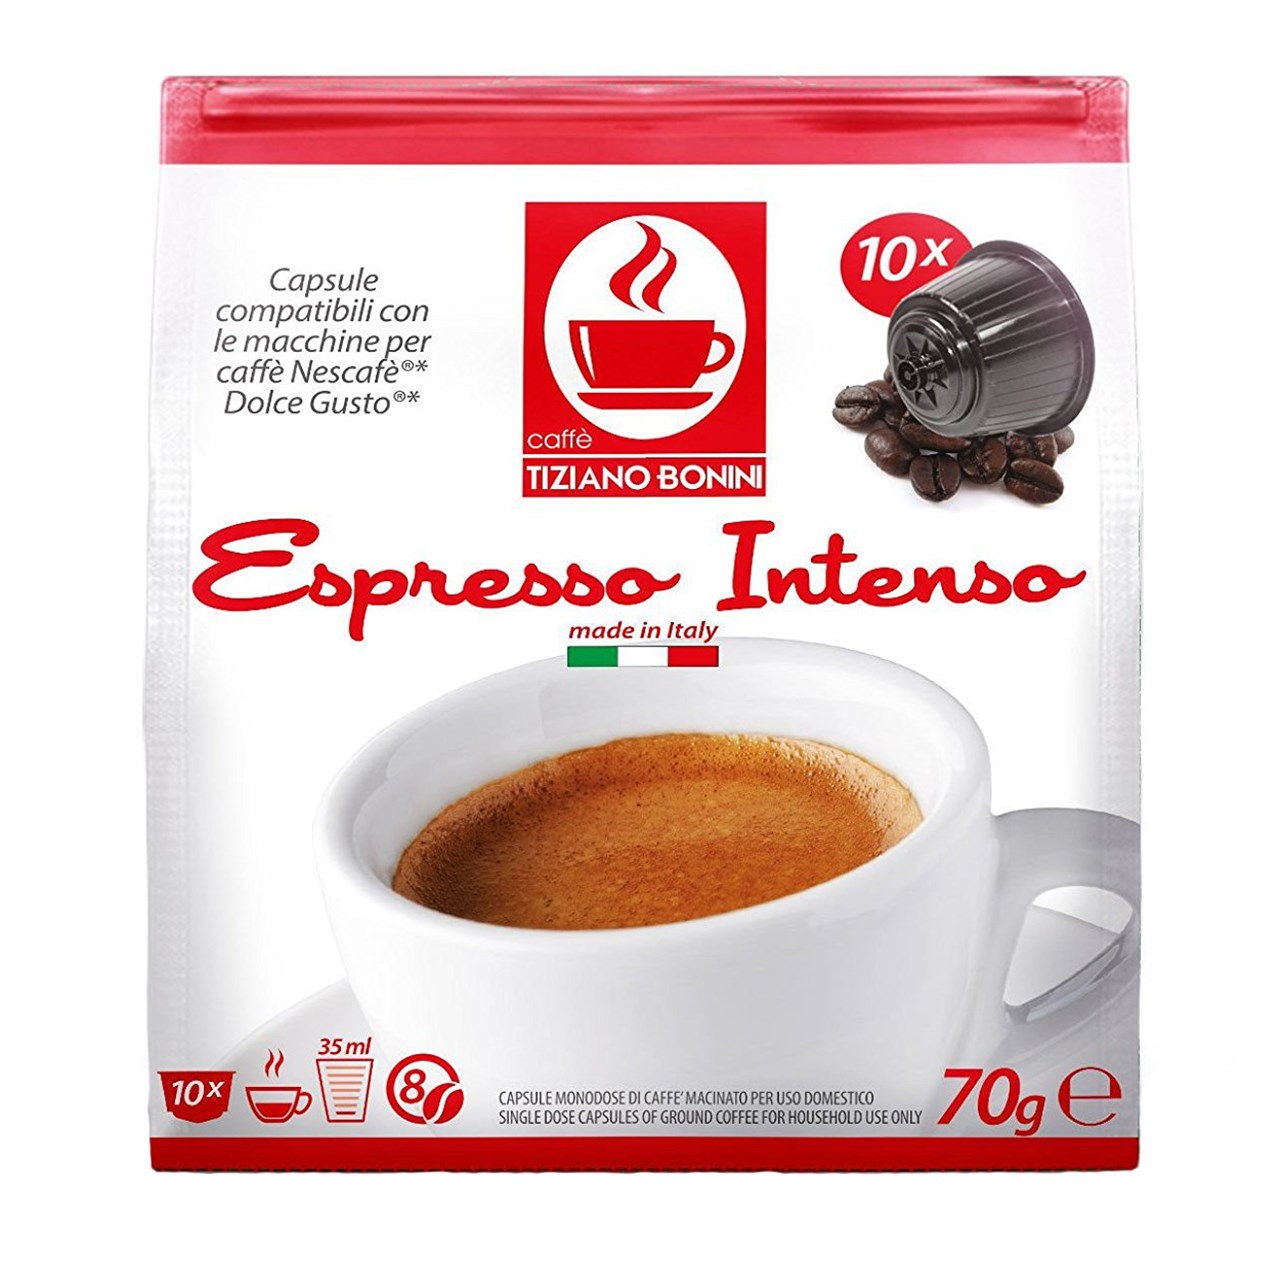 کپسول قهوه تیزیانو بونینی مدل Intenso